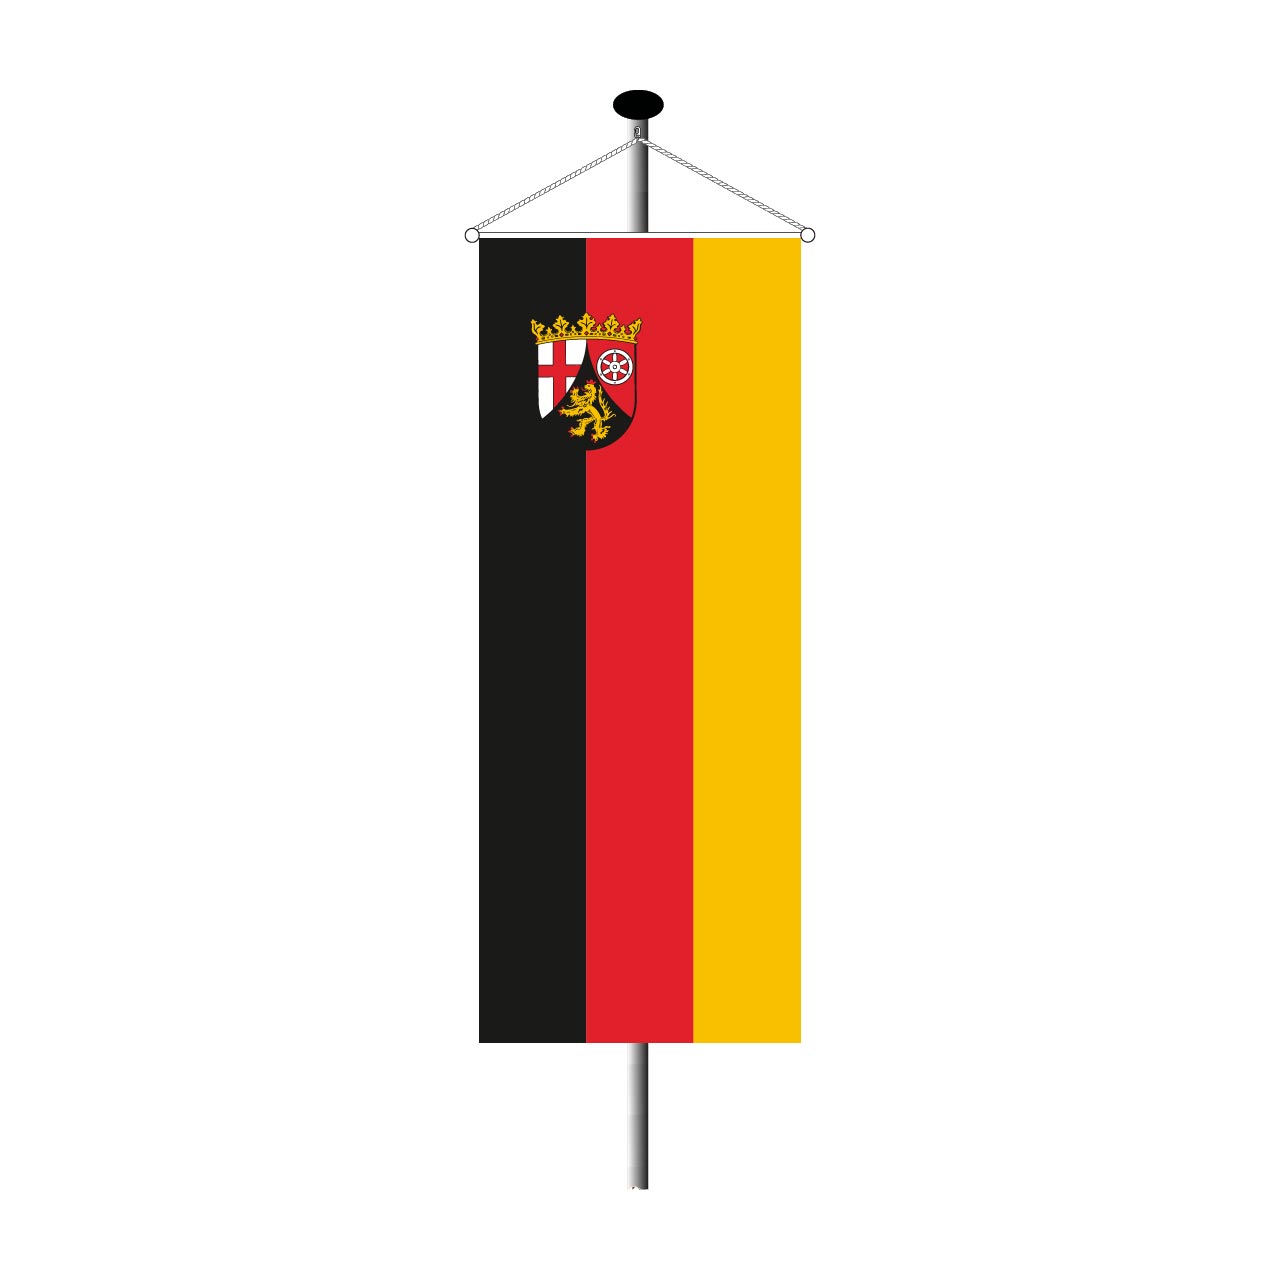 Bannerfahne Rheinland-Pfalz